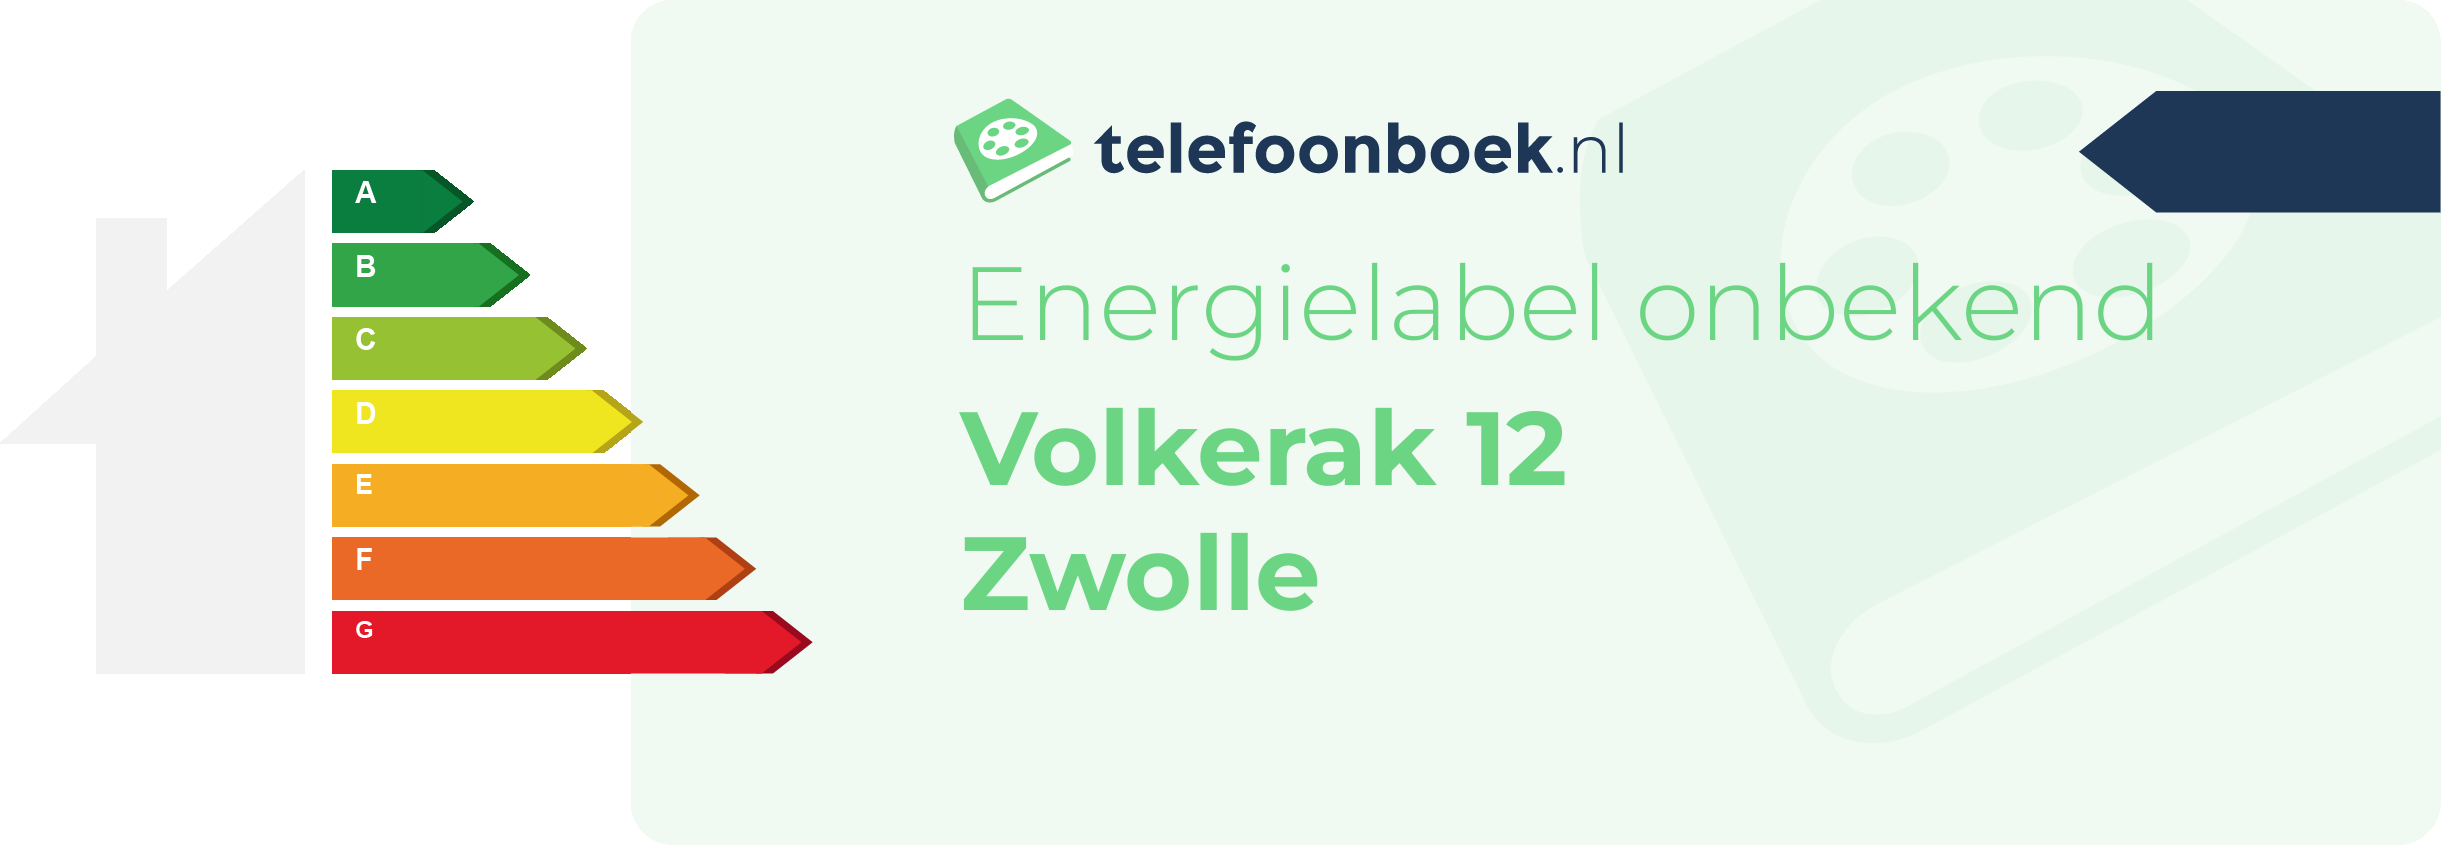 Energielabel Volkerak 12 Zwolle